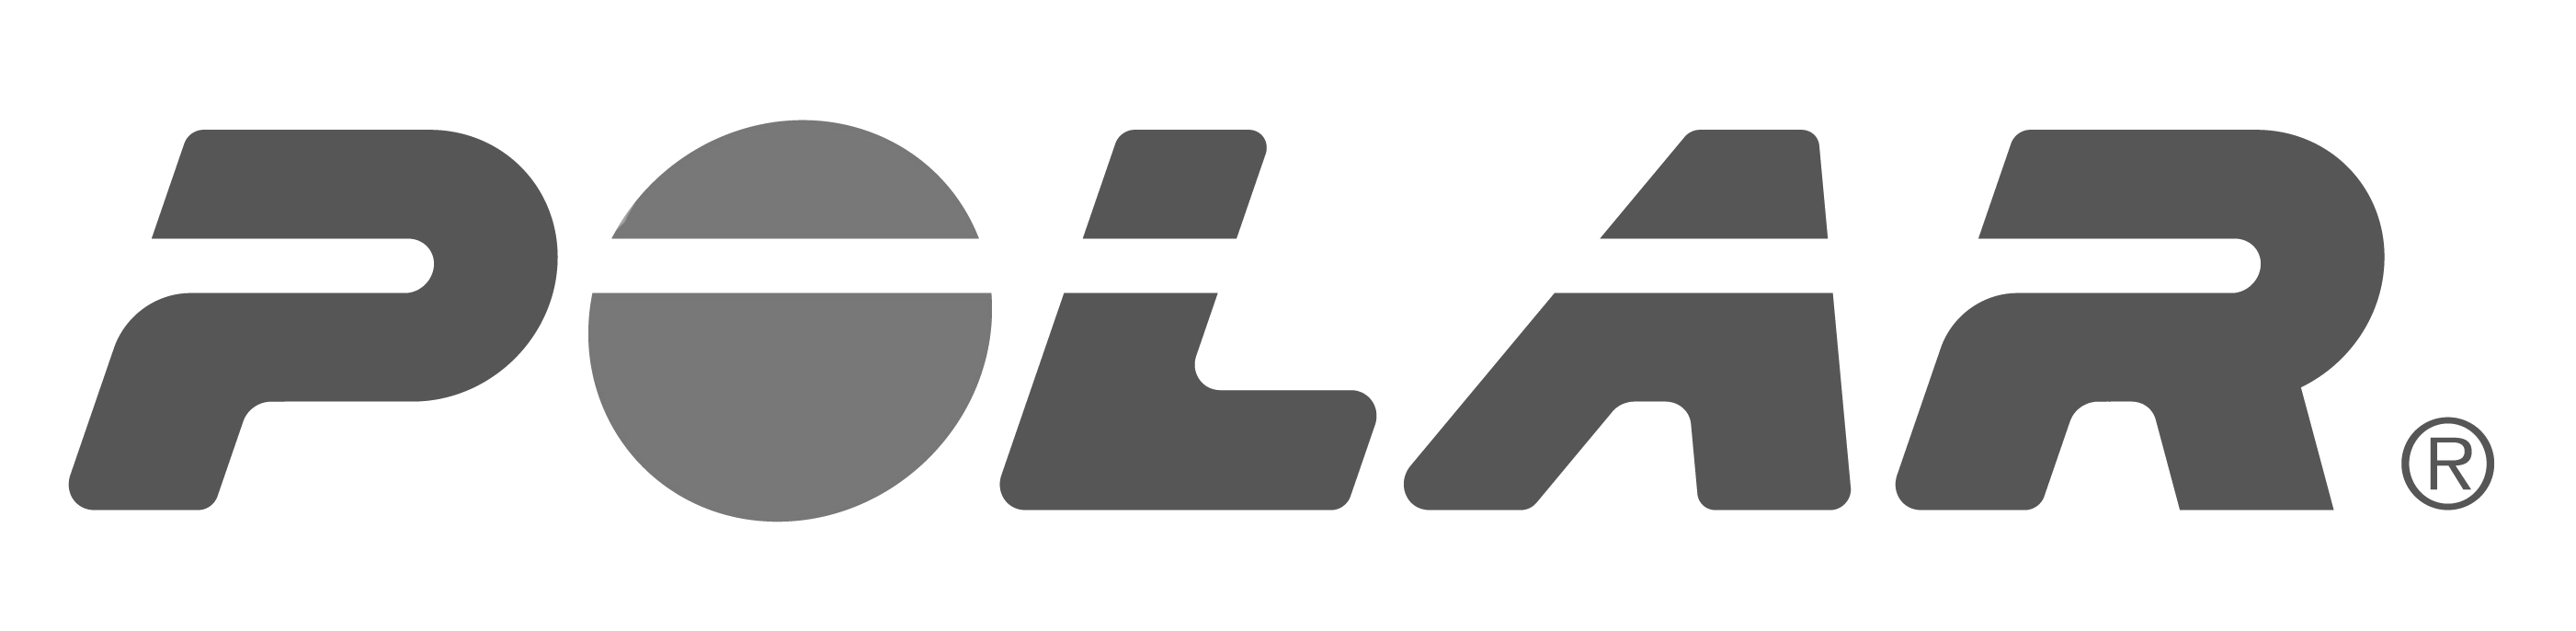 logo_polar.png